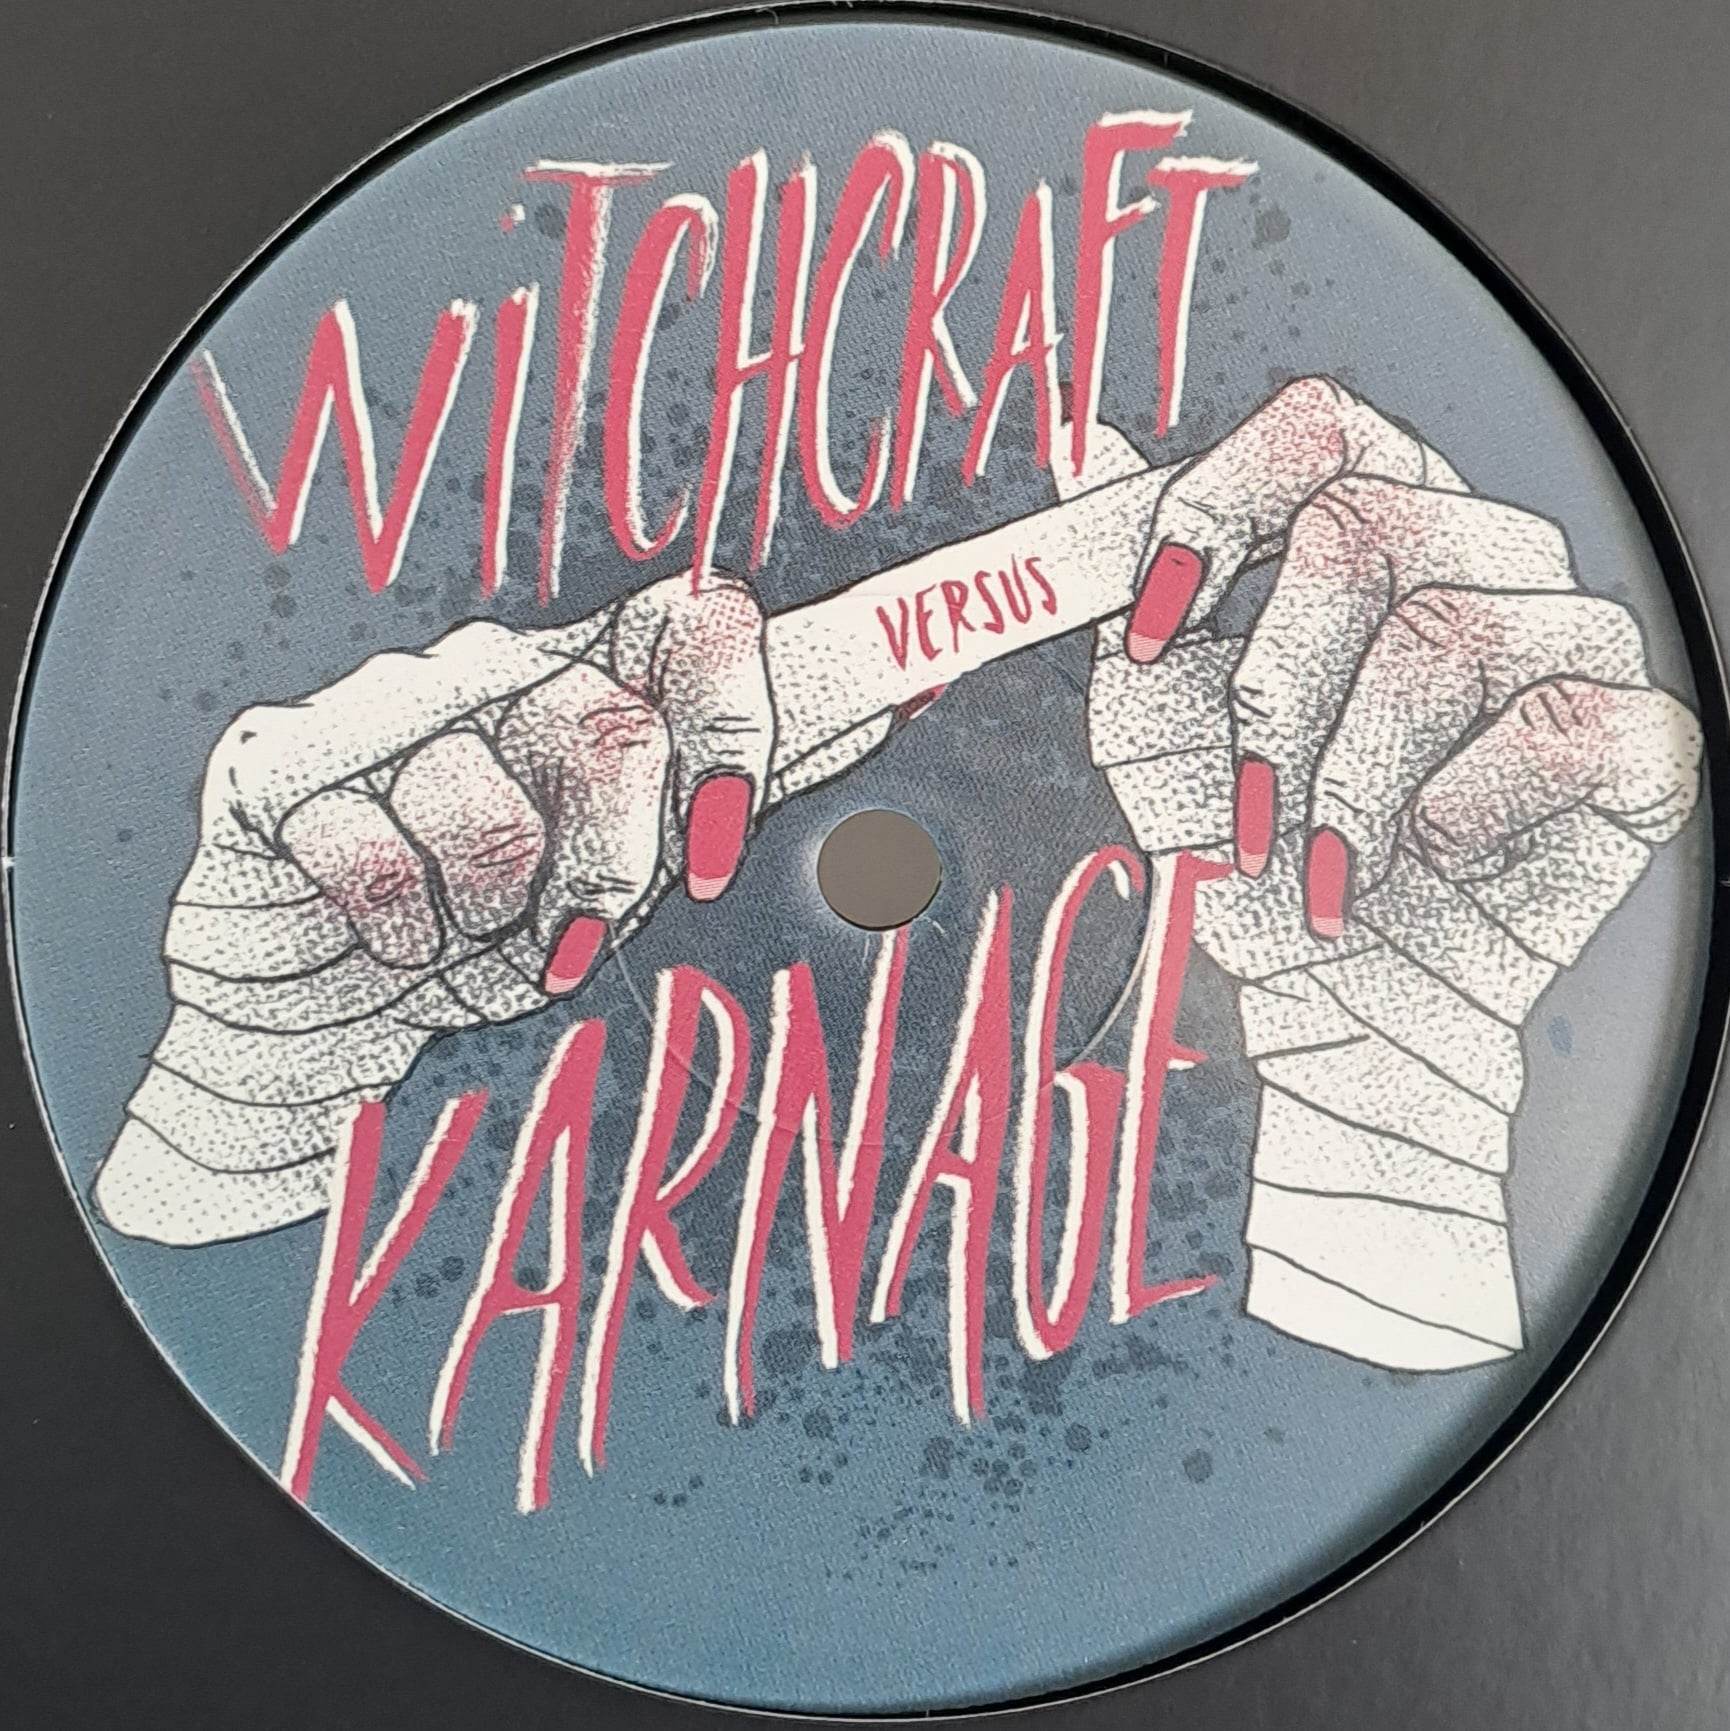 Witchcraft vs Karnage - vinyle freetekno